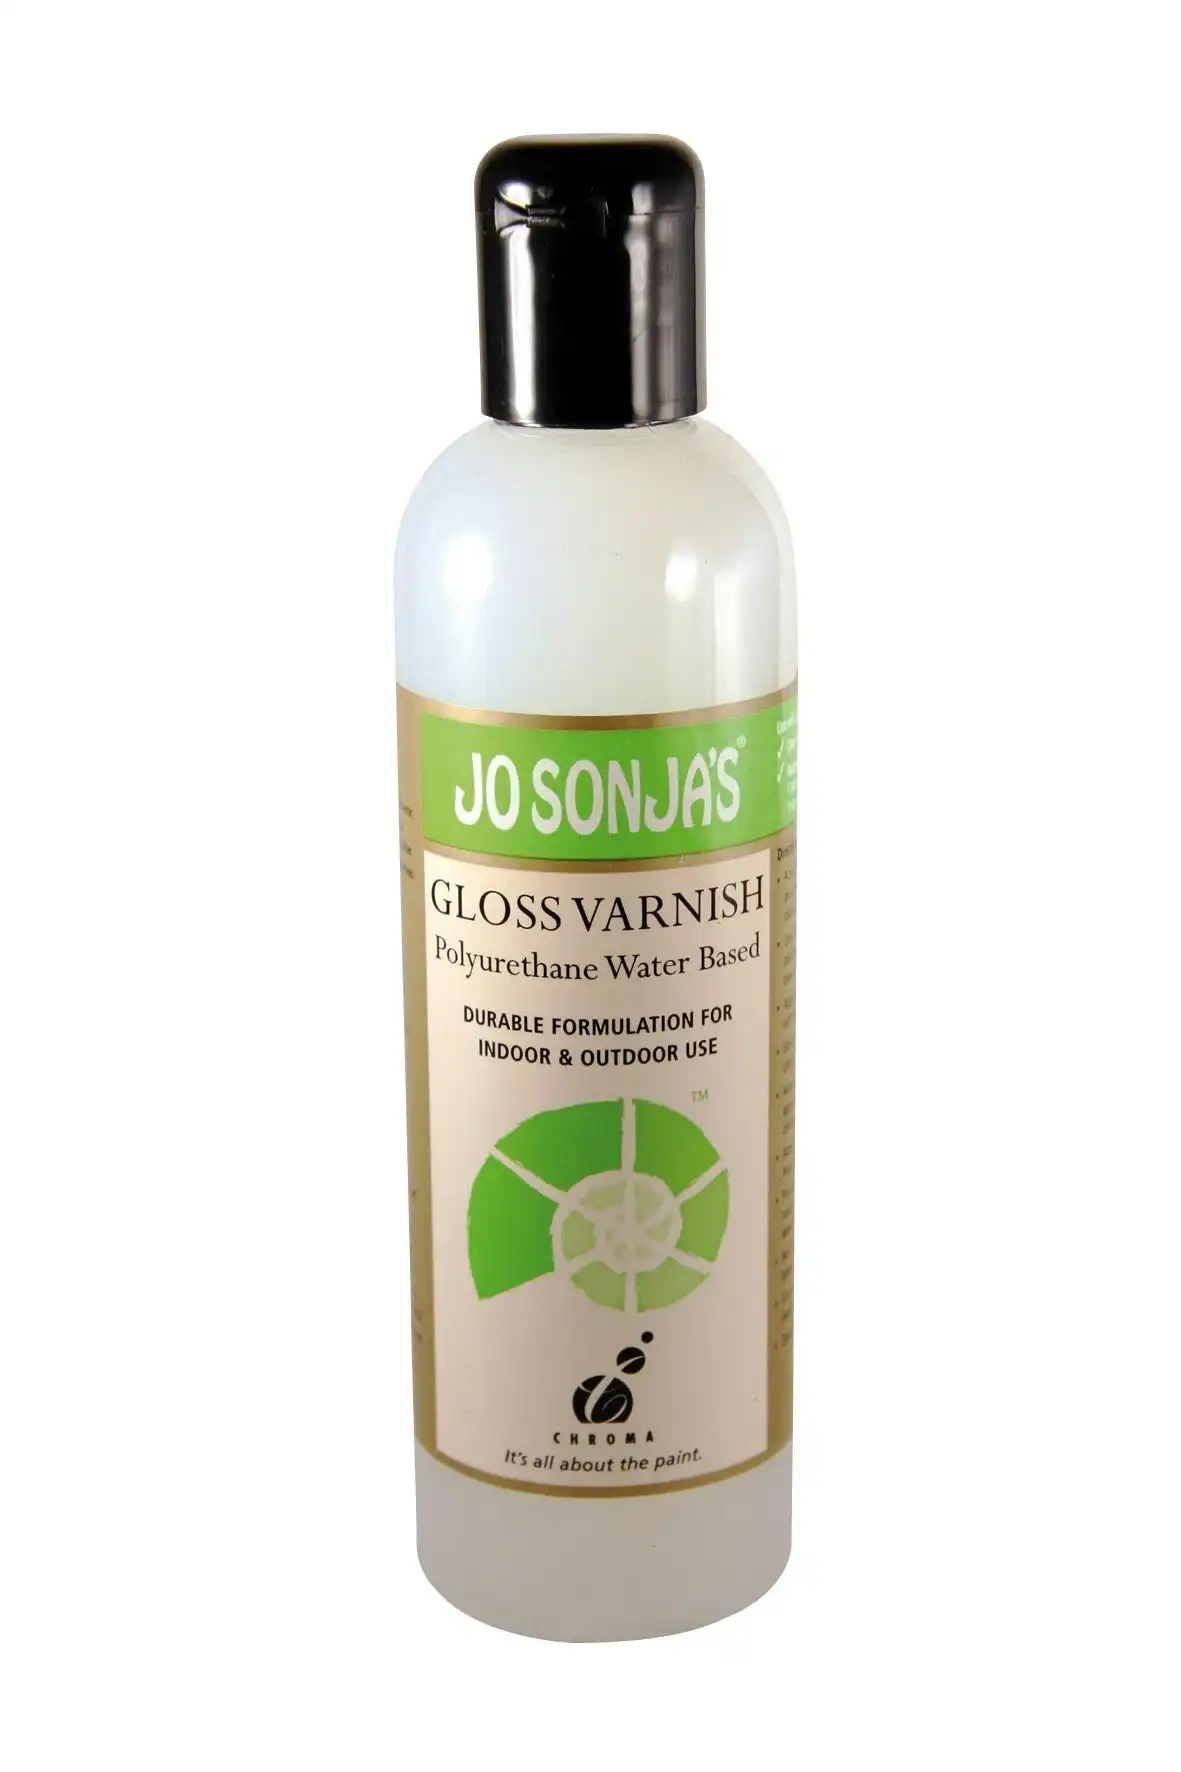 Jo Sonja's Poly Water-Based Gloss Varnish